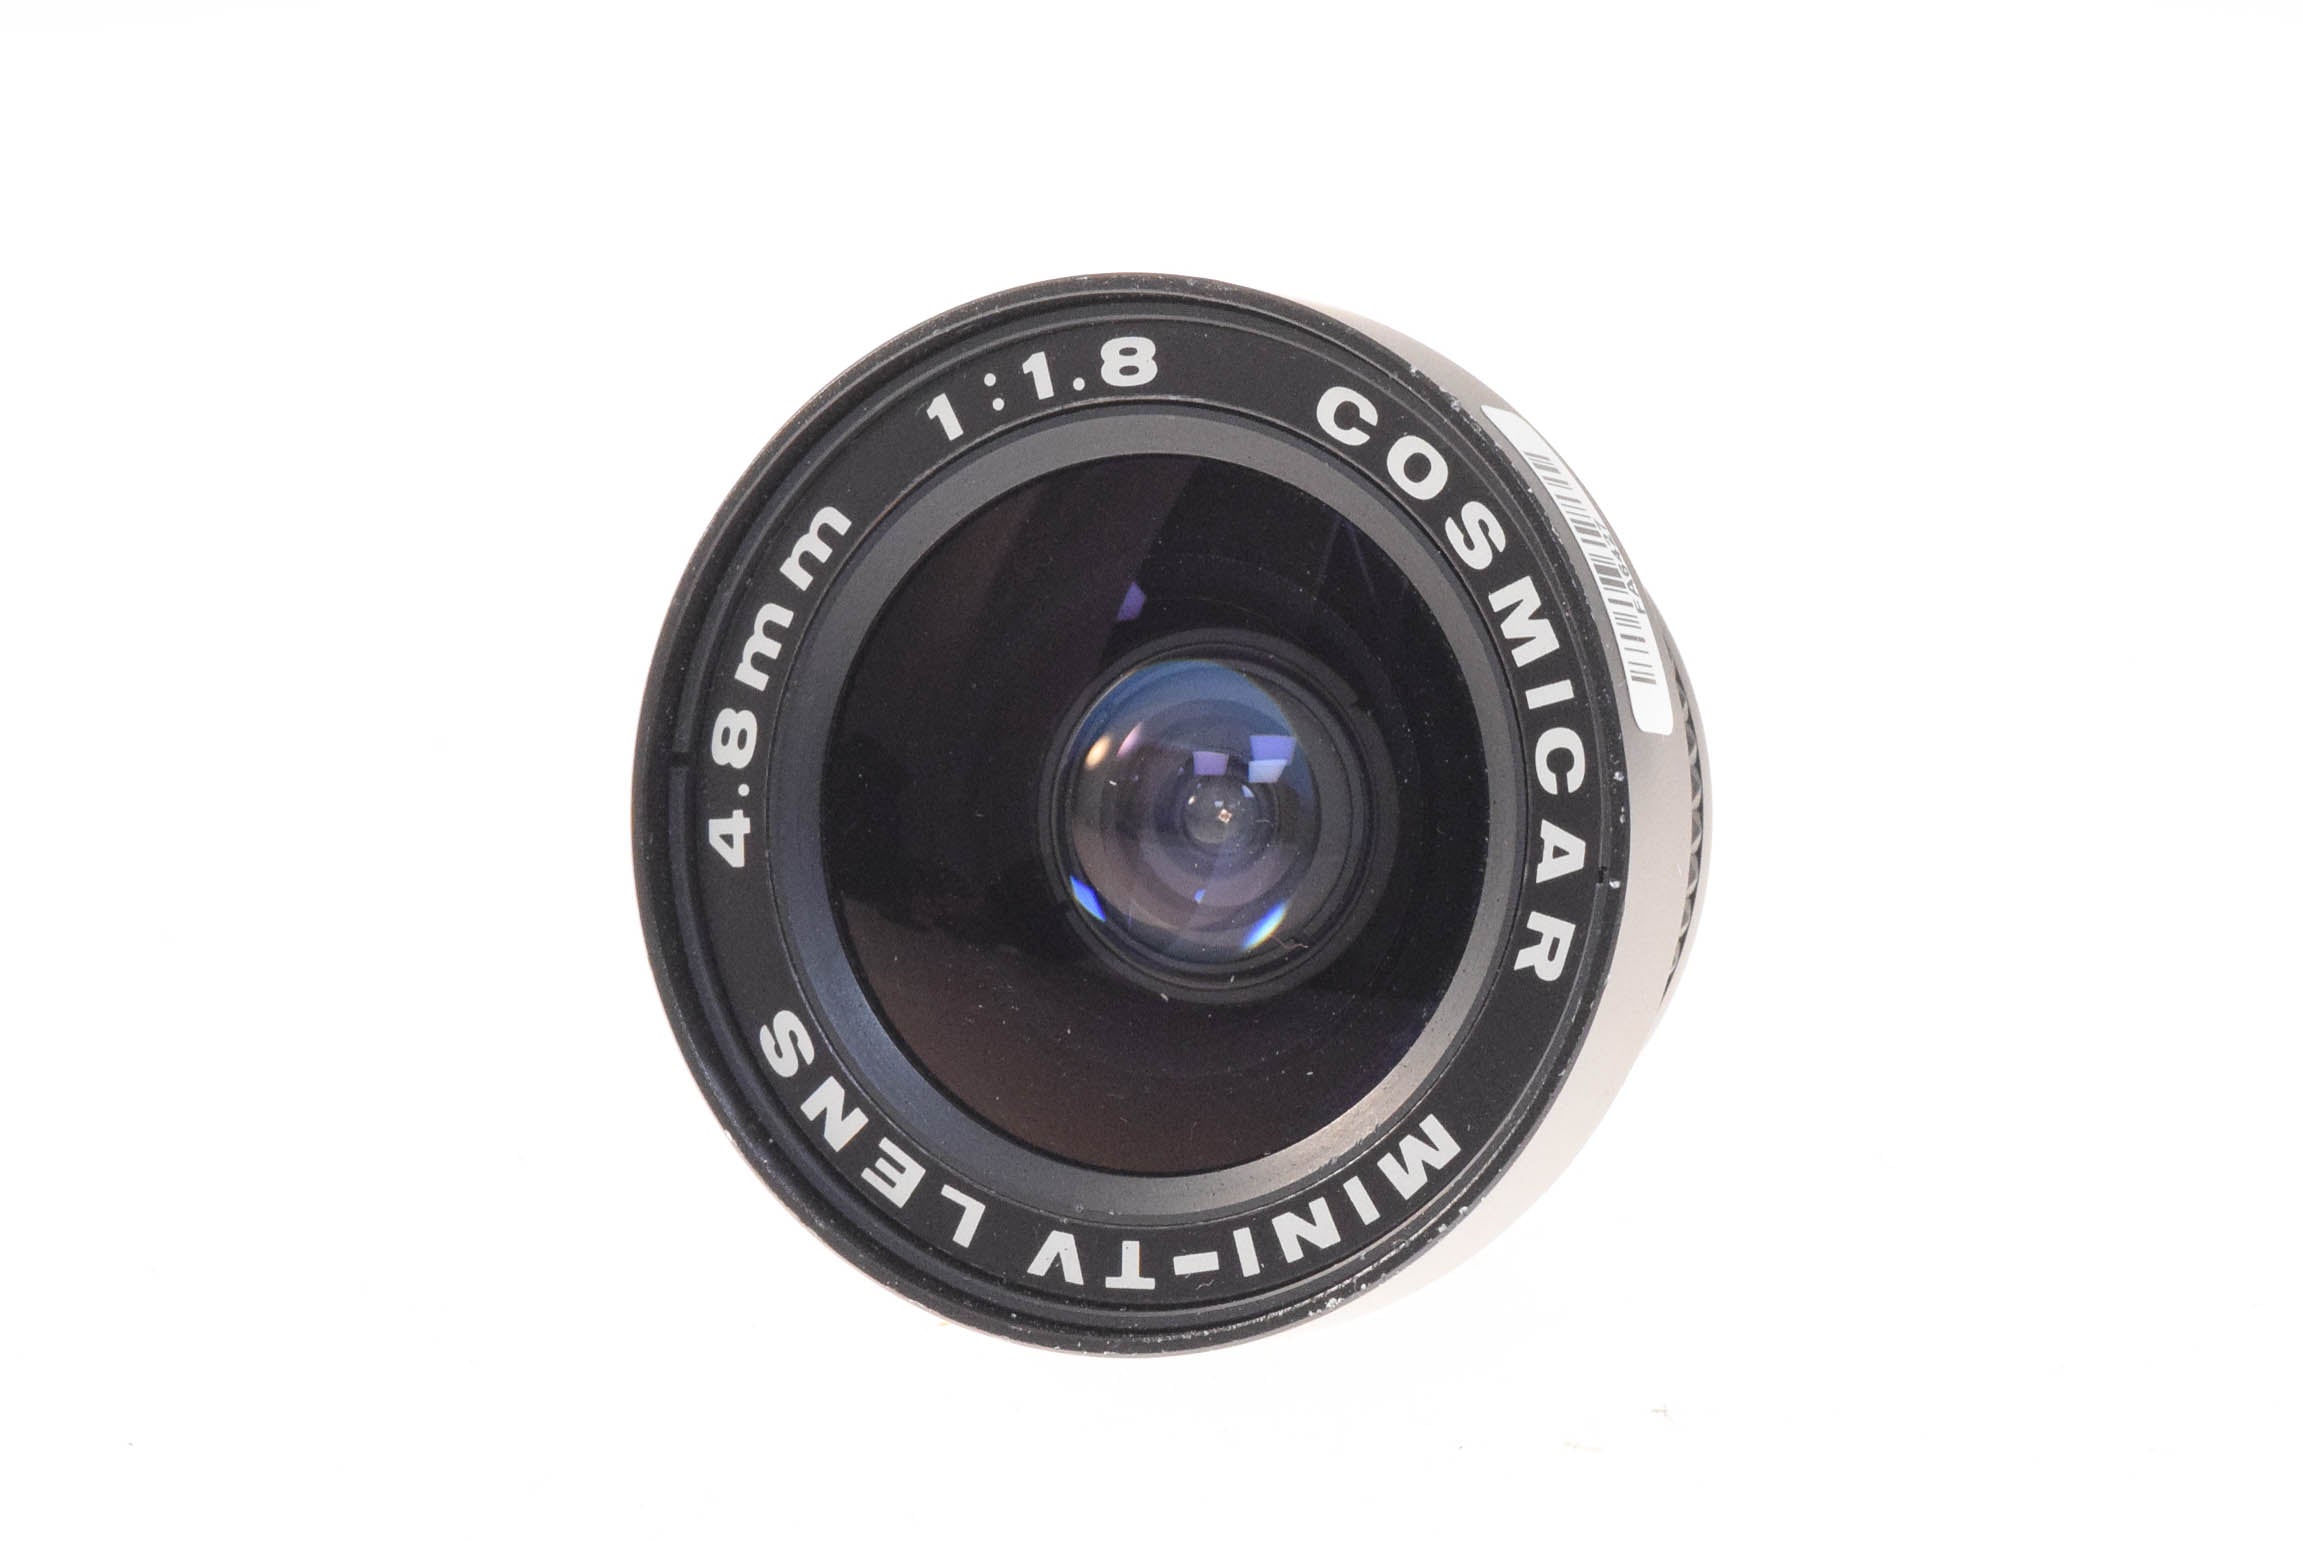 Cosmicar 4.8mm f1.8 TV Lens – Kamerastore